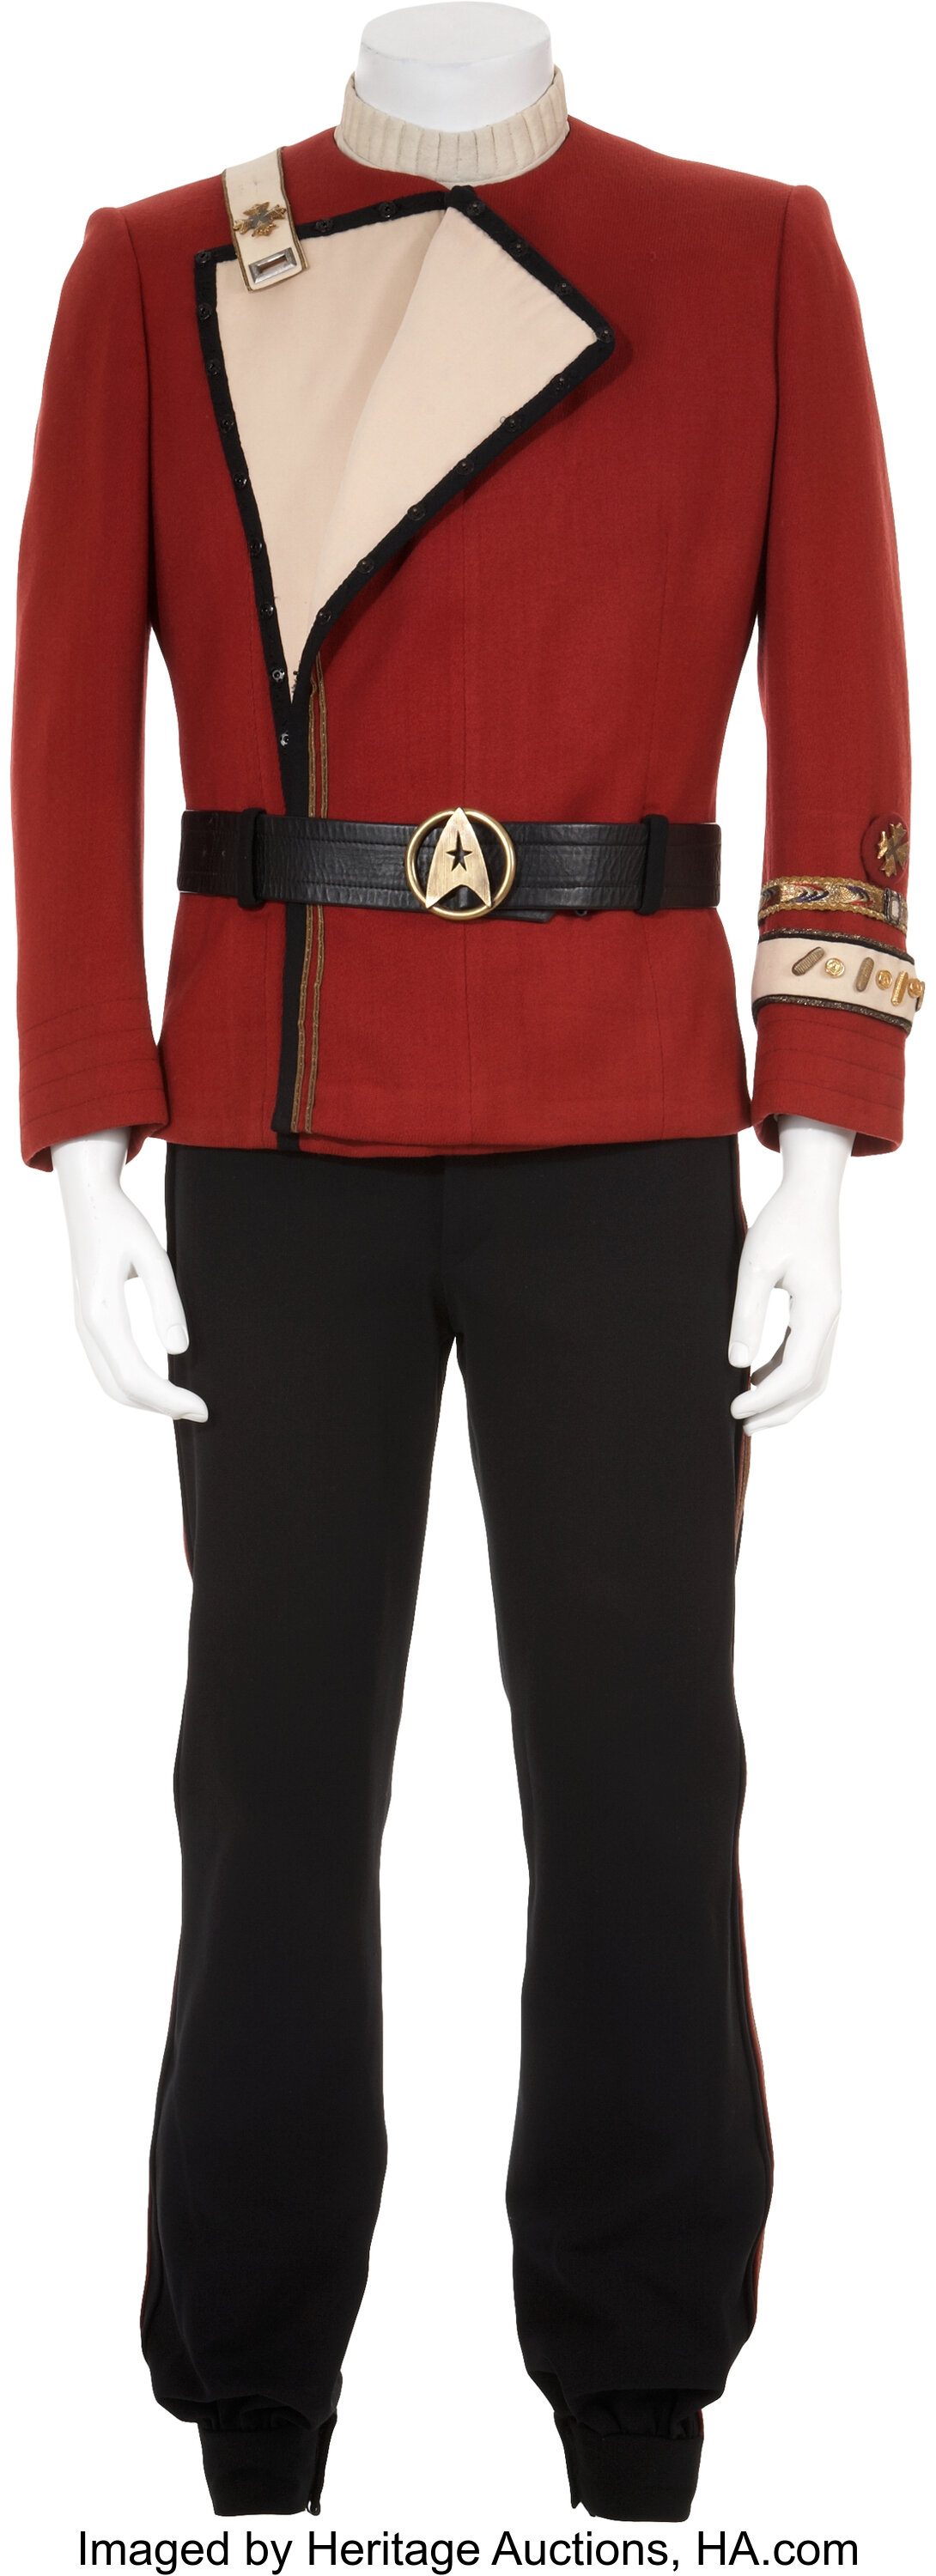 star trek uniform for sale